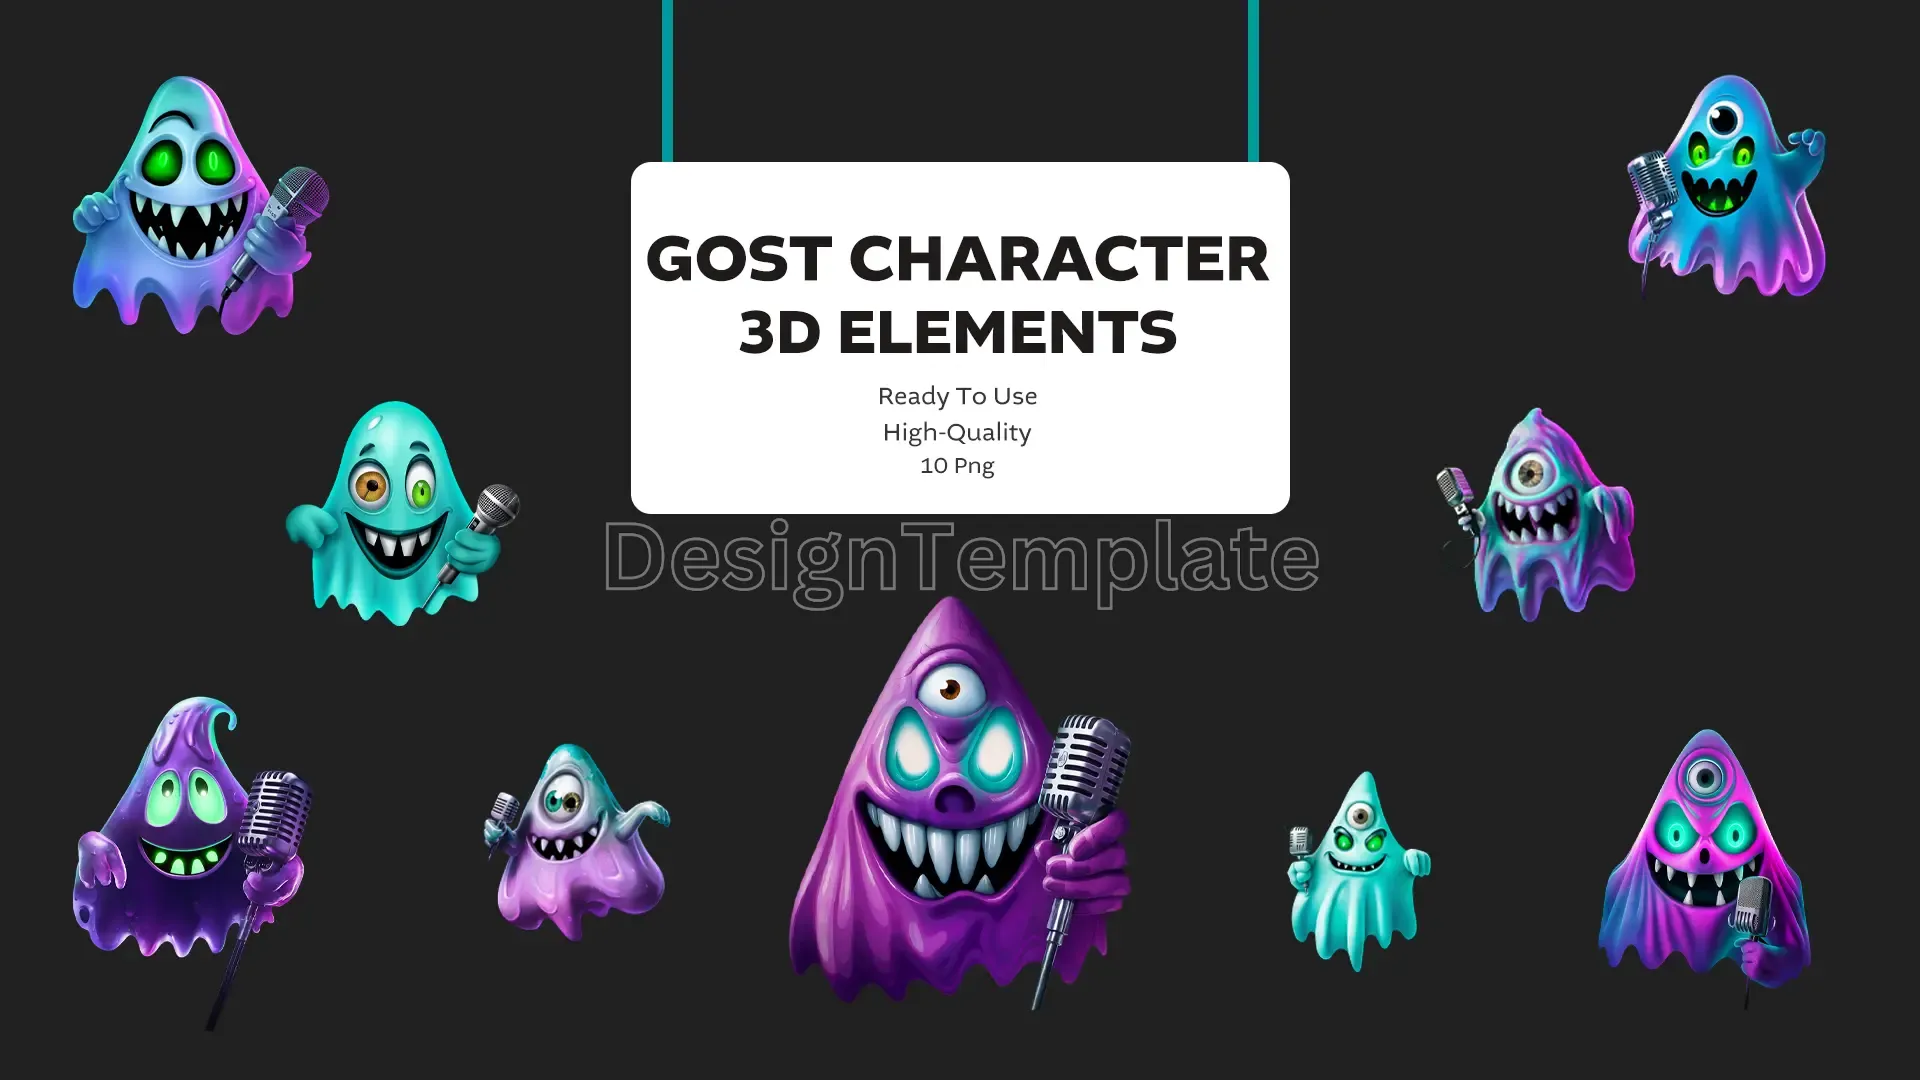 Phantom Features Exquisite 3D Ghost Elements image